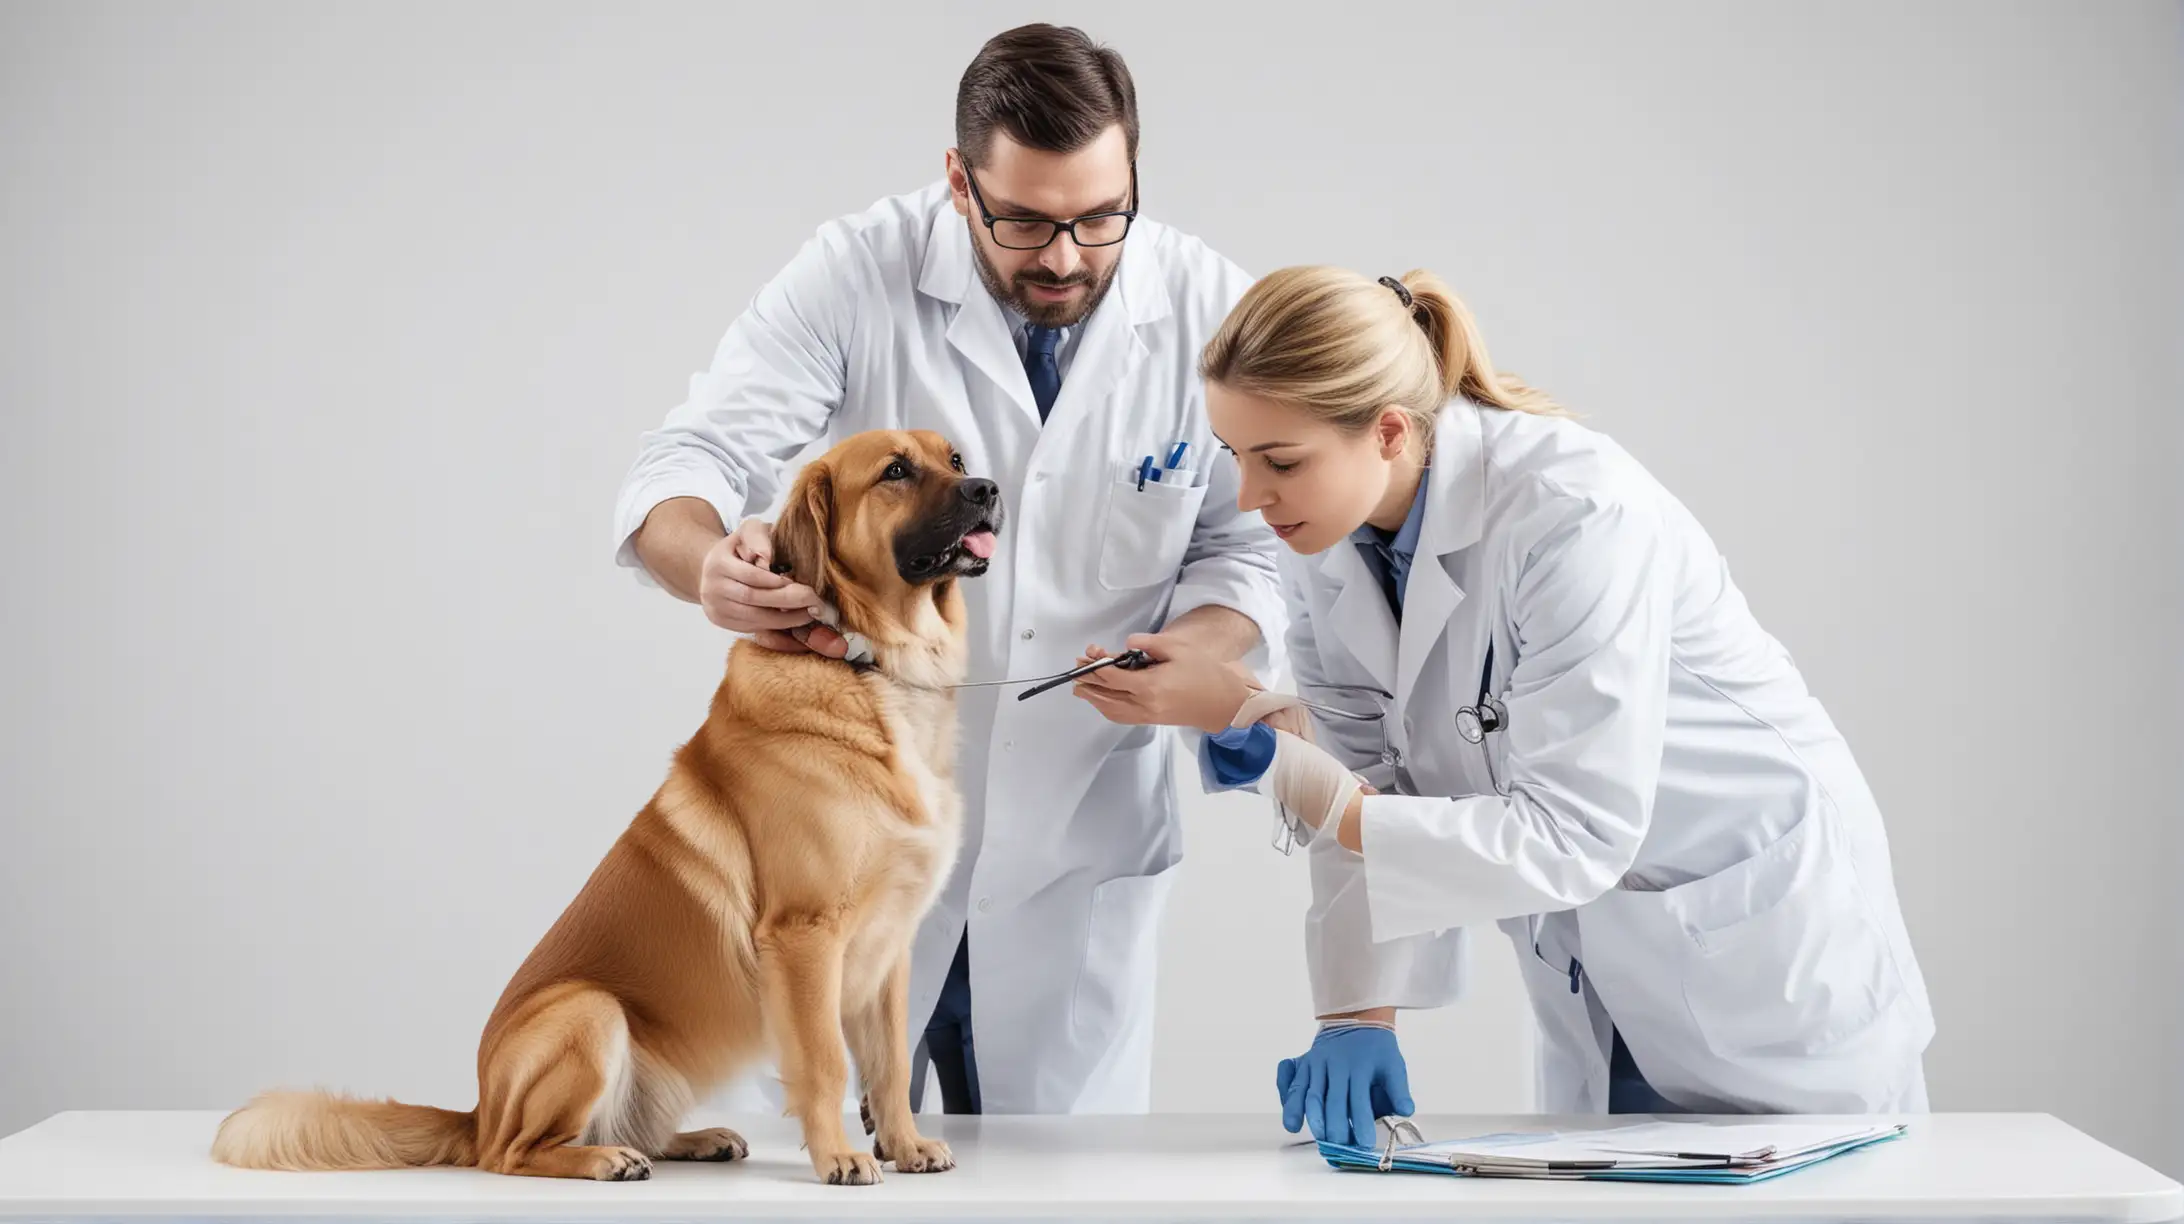 Veterinarians Examining Dog on White Background